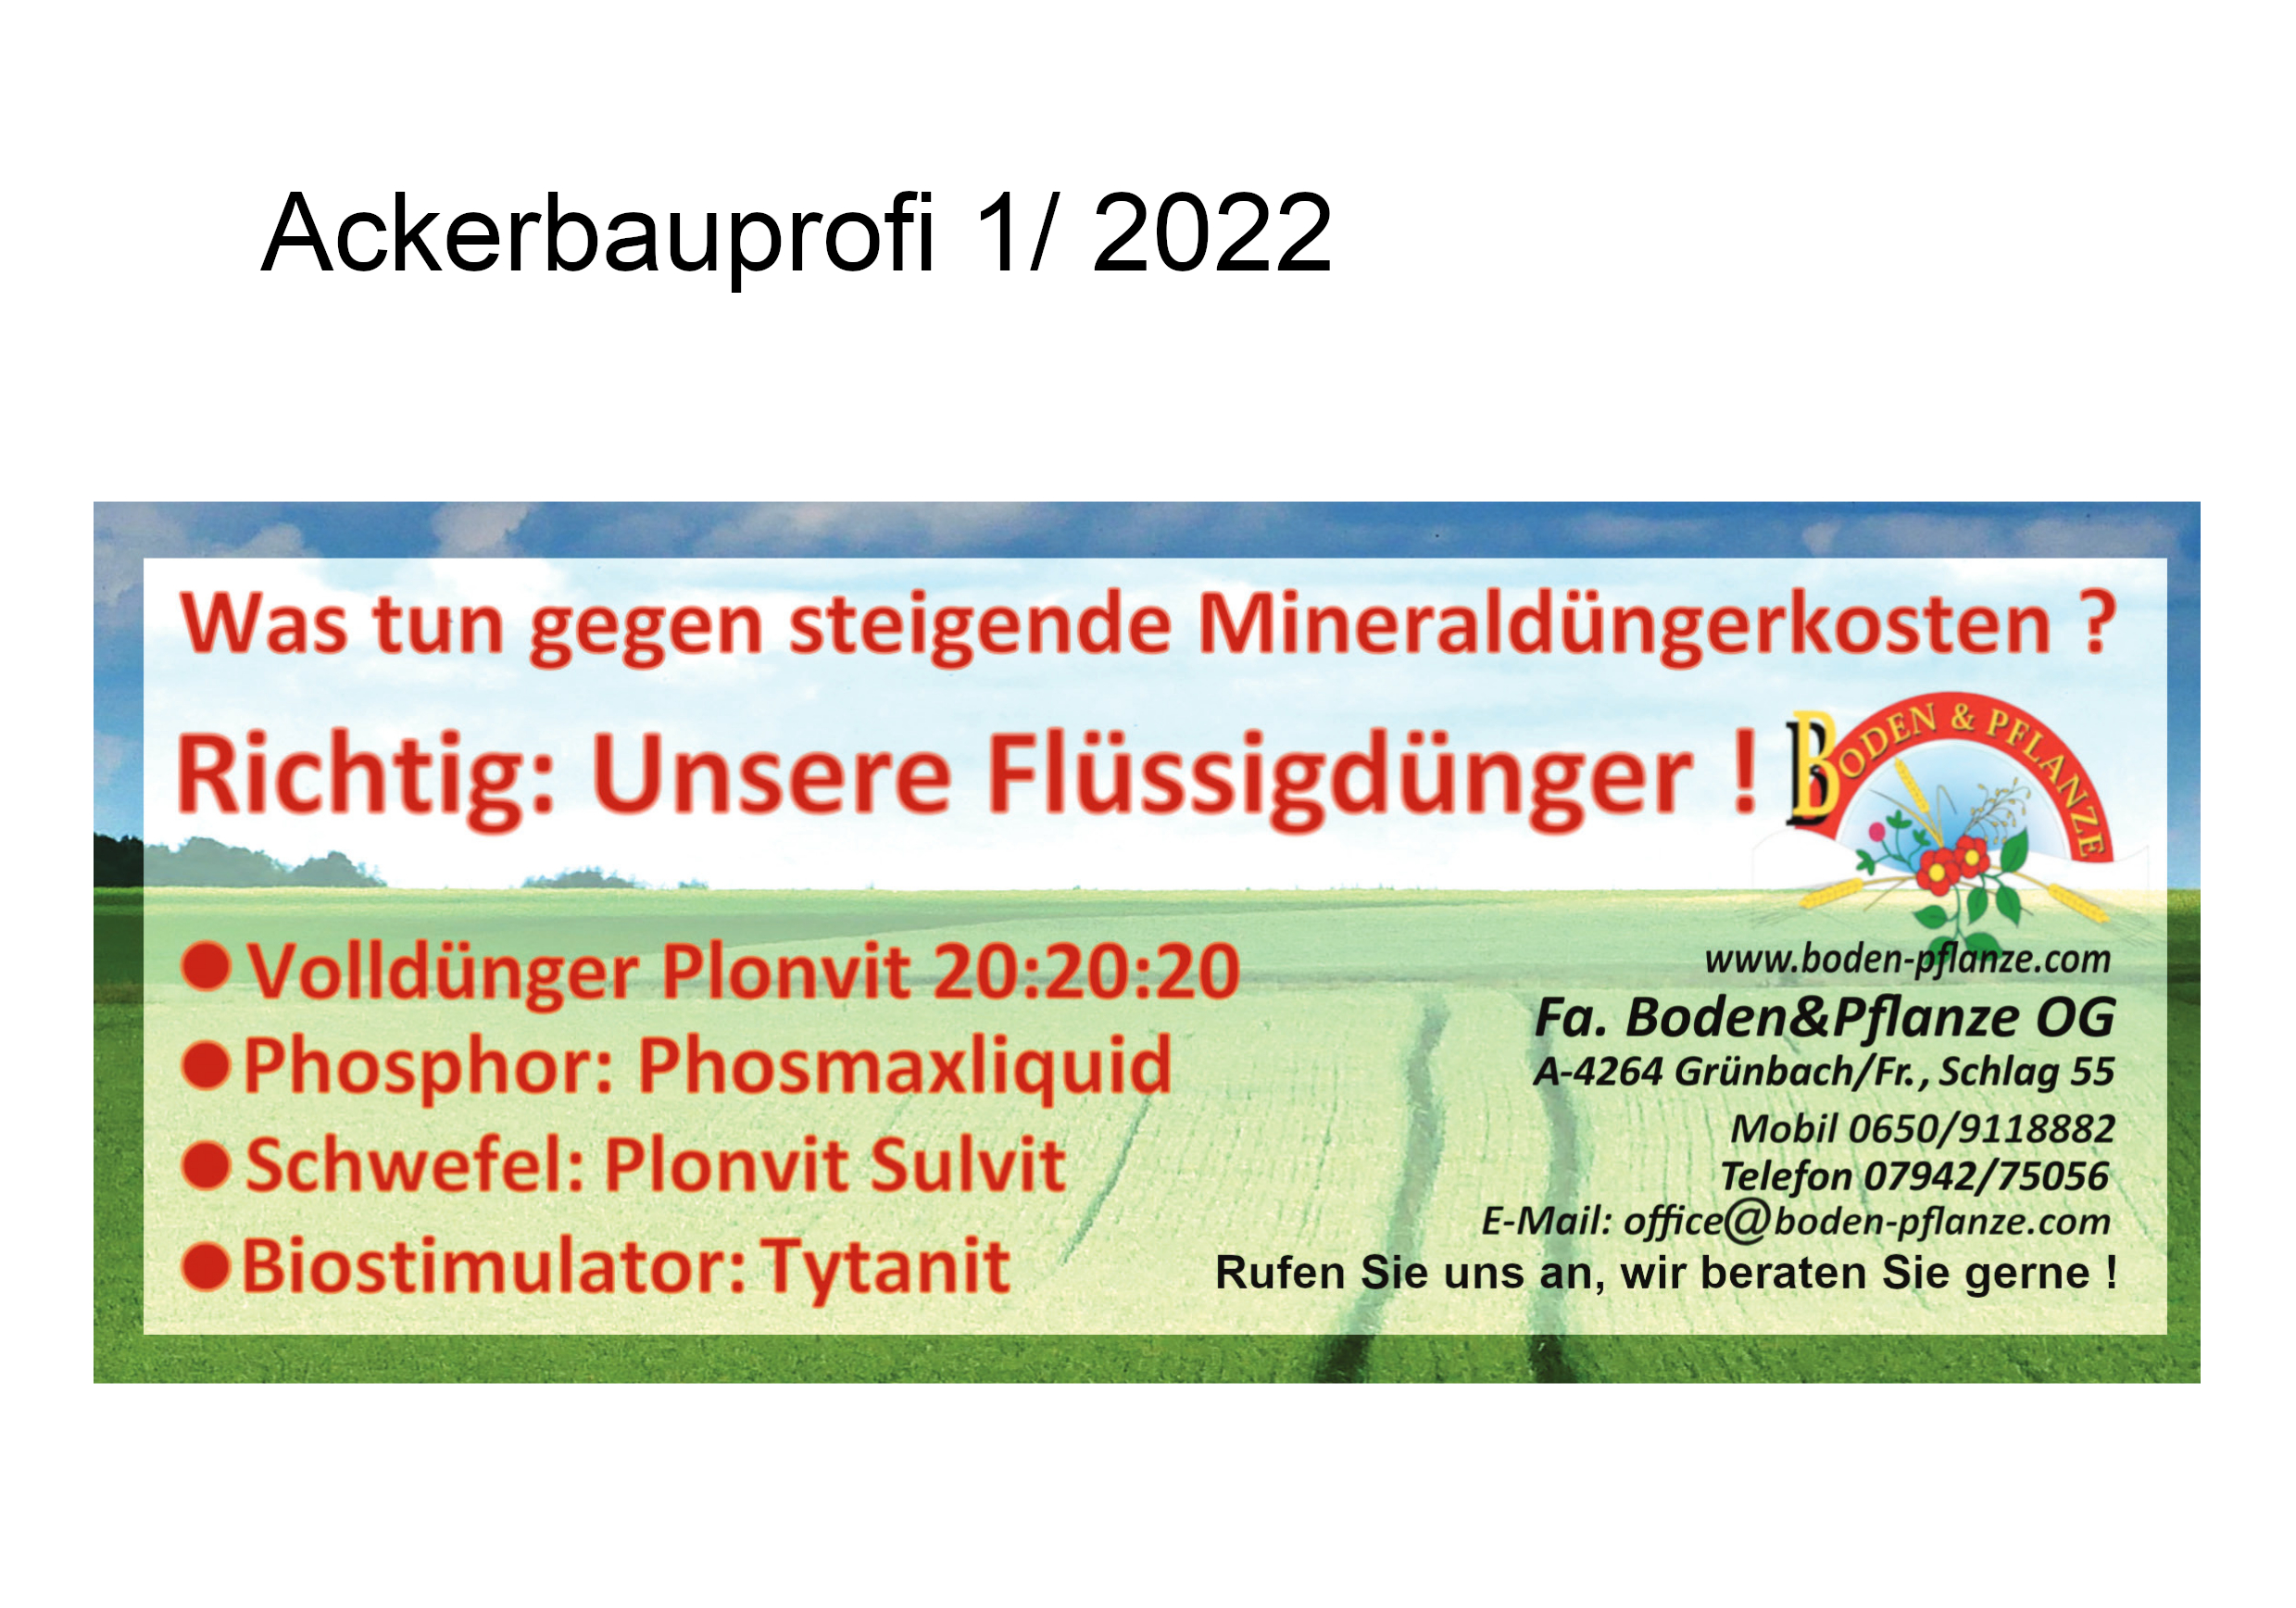 Ackerbauprofi2022